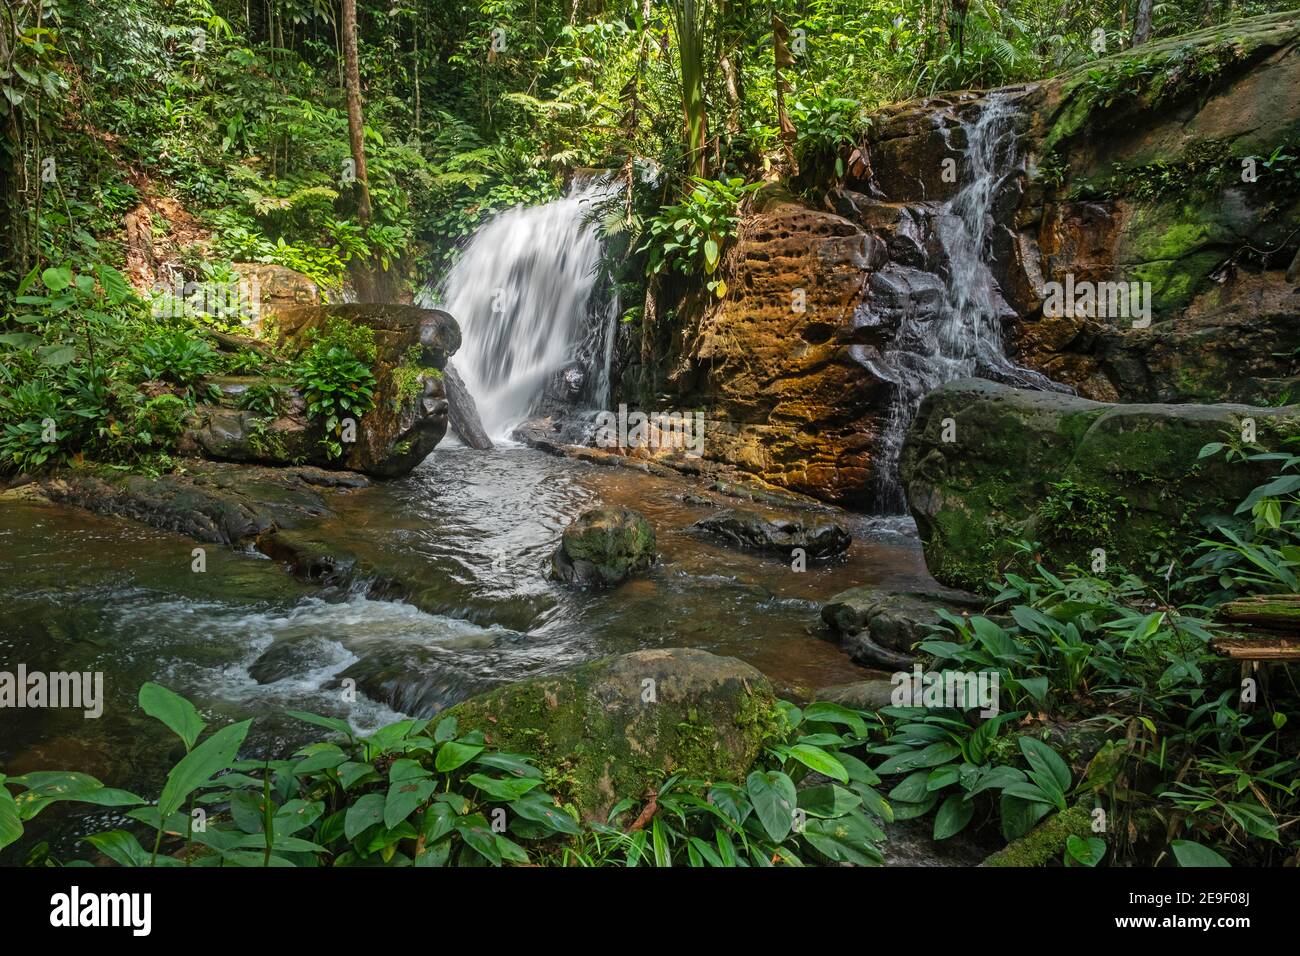 Cachoeira da Onça, waterfall in the jungle / rain forest / rainforest near Presidente Figueiredo, Amazonas State, Brazil Stock Photo